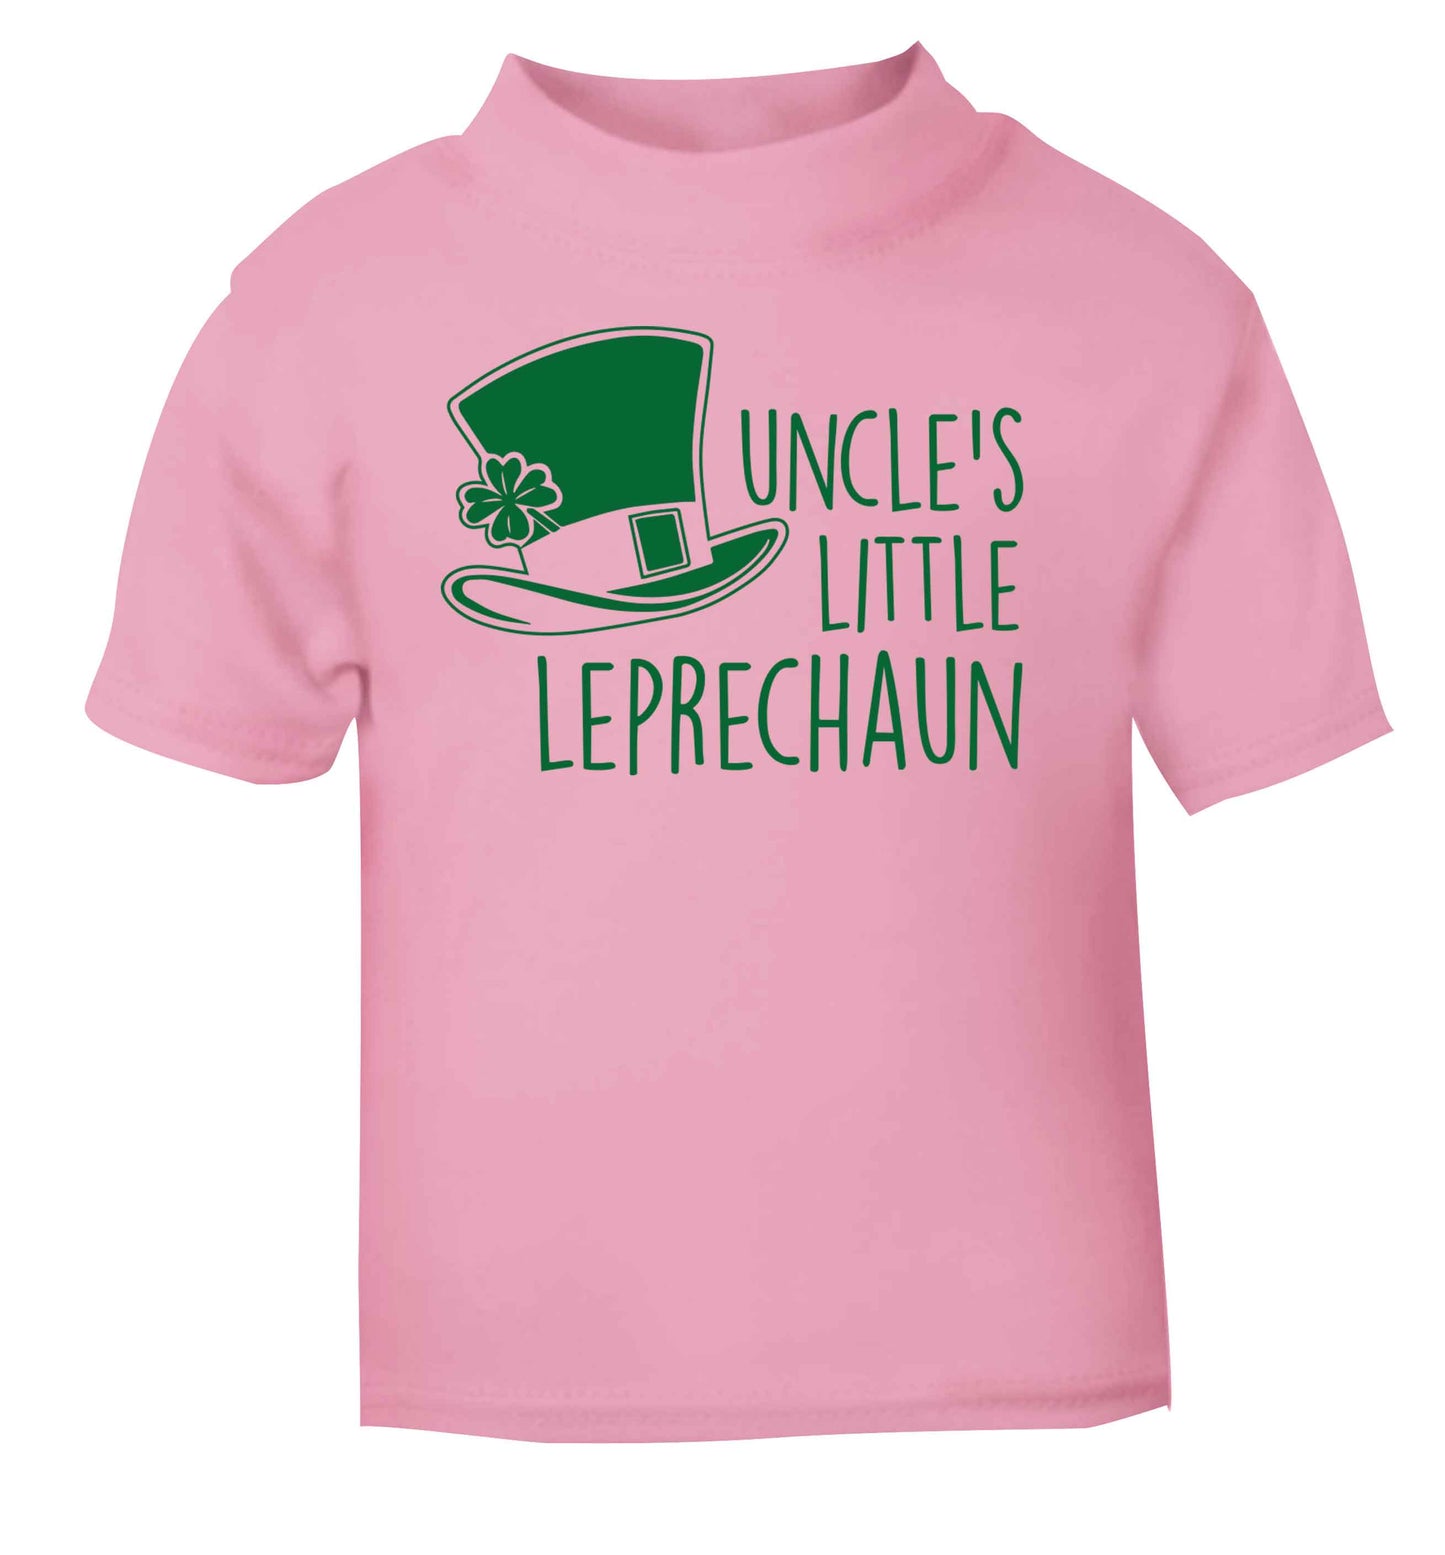 Uncles little leprechaun light pink baby toddler Tshirt 2 Years